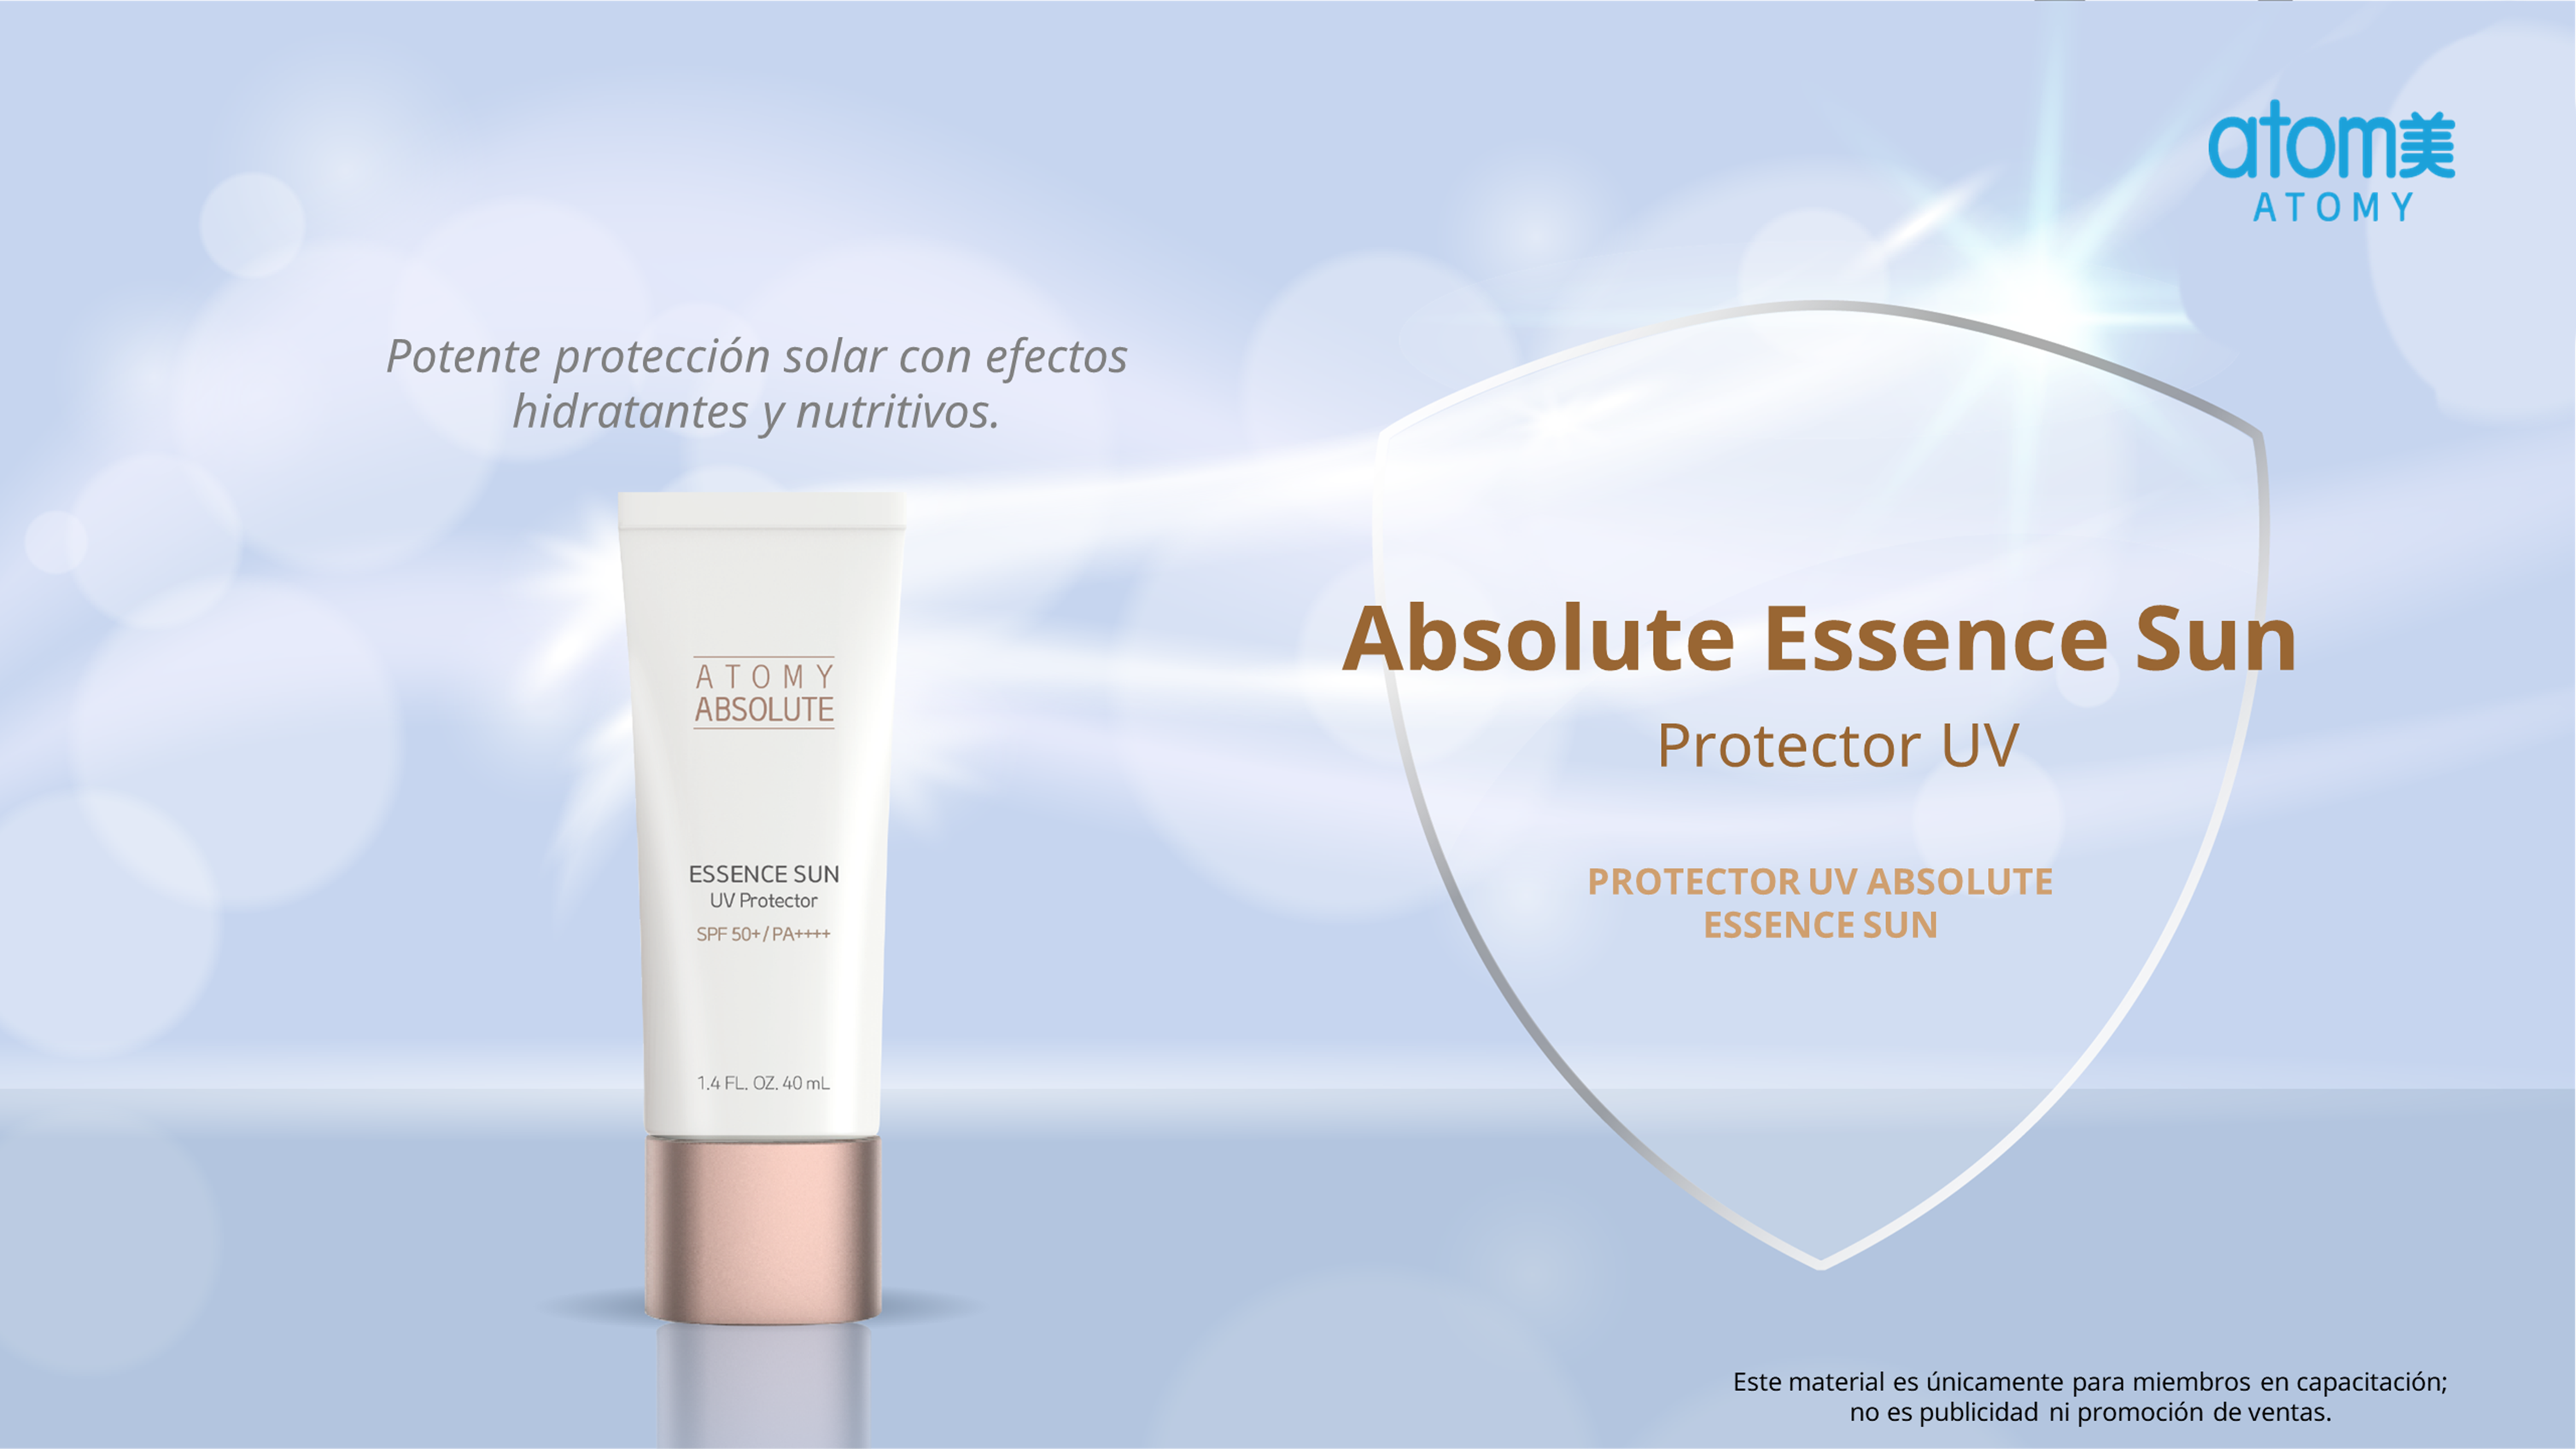 Absolute Essence Sun Protector UV